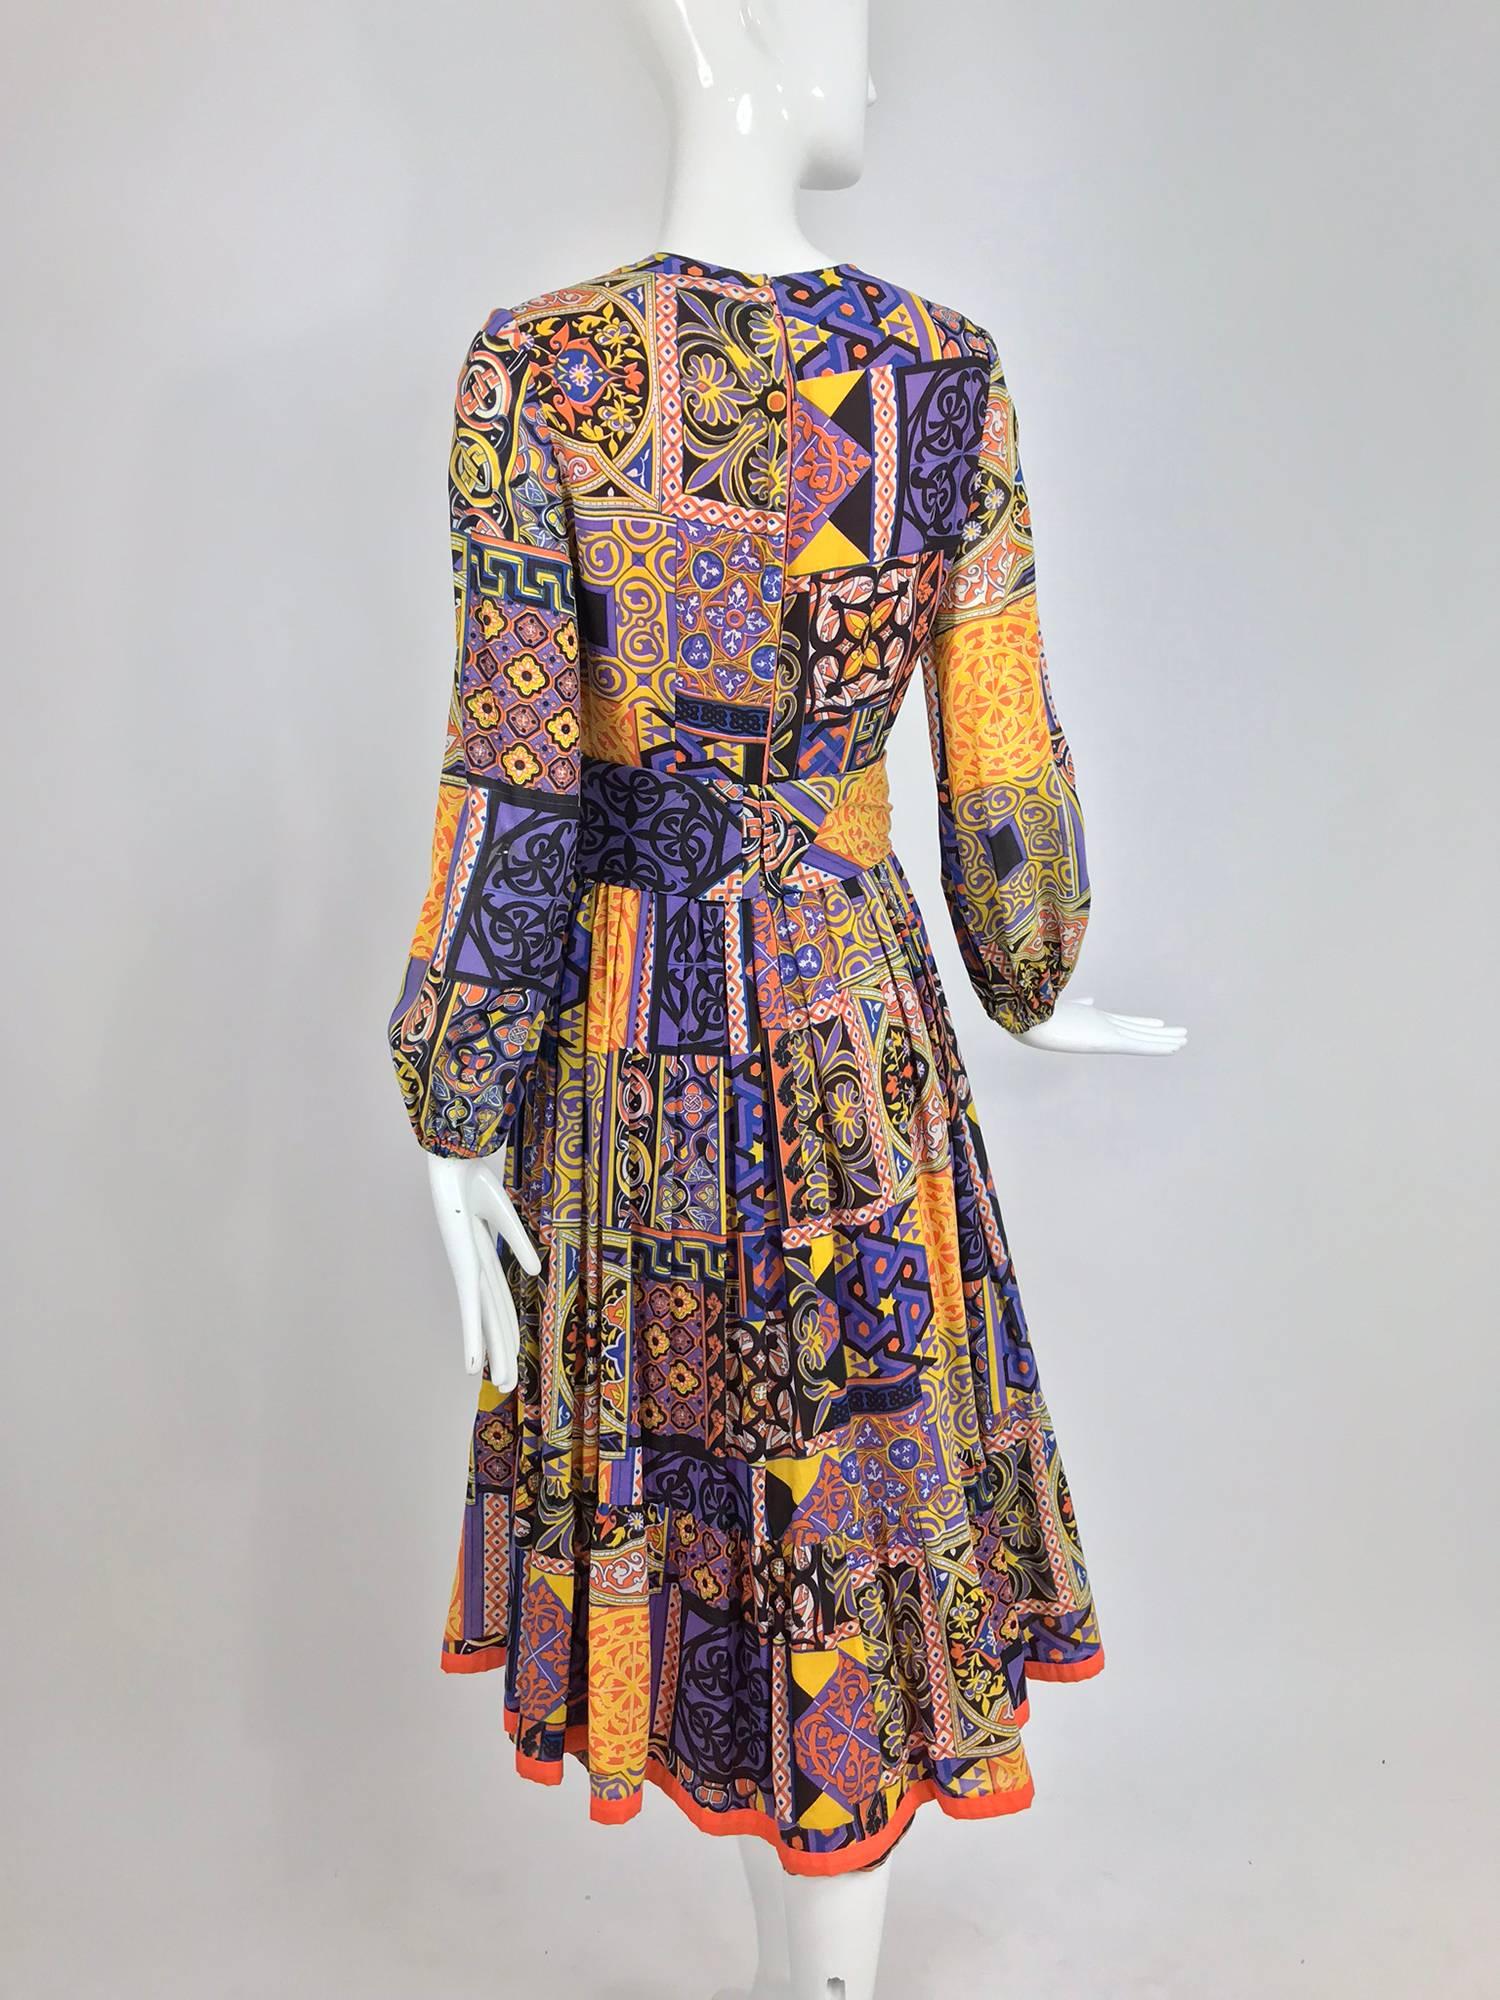 Moorish mosaic cotton print laced front bohemian dress 1960s 4